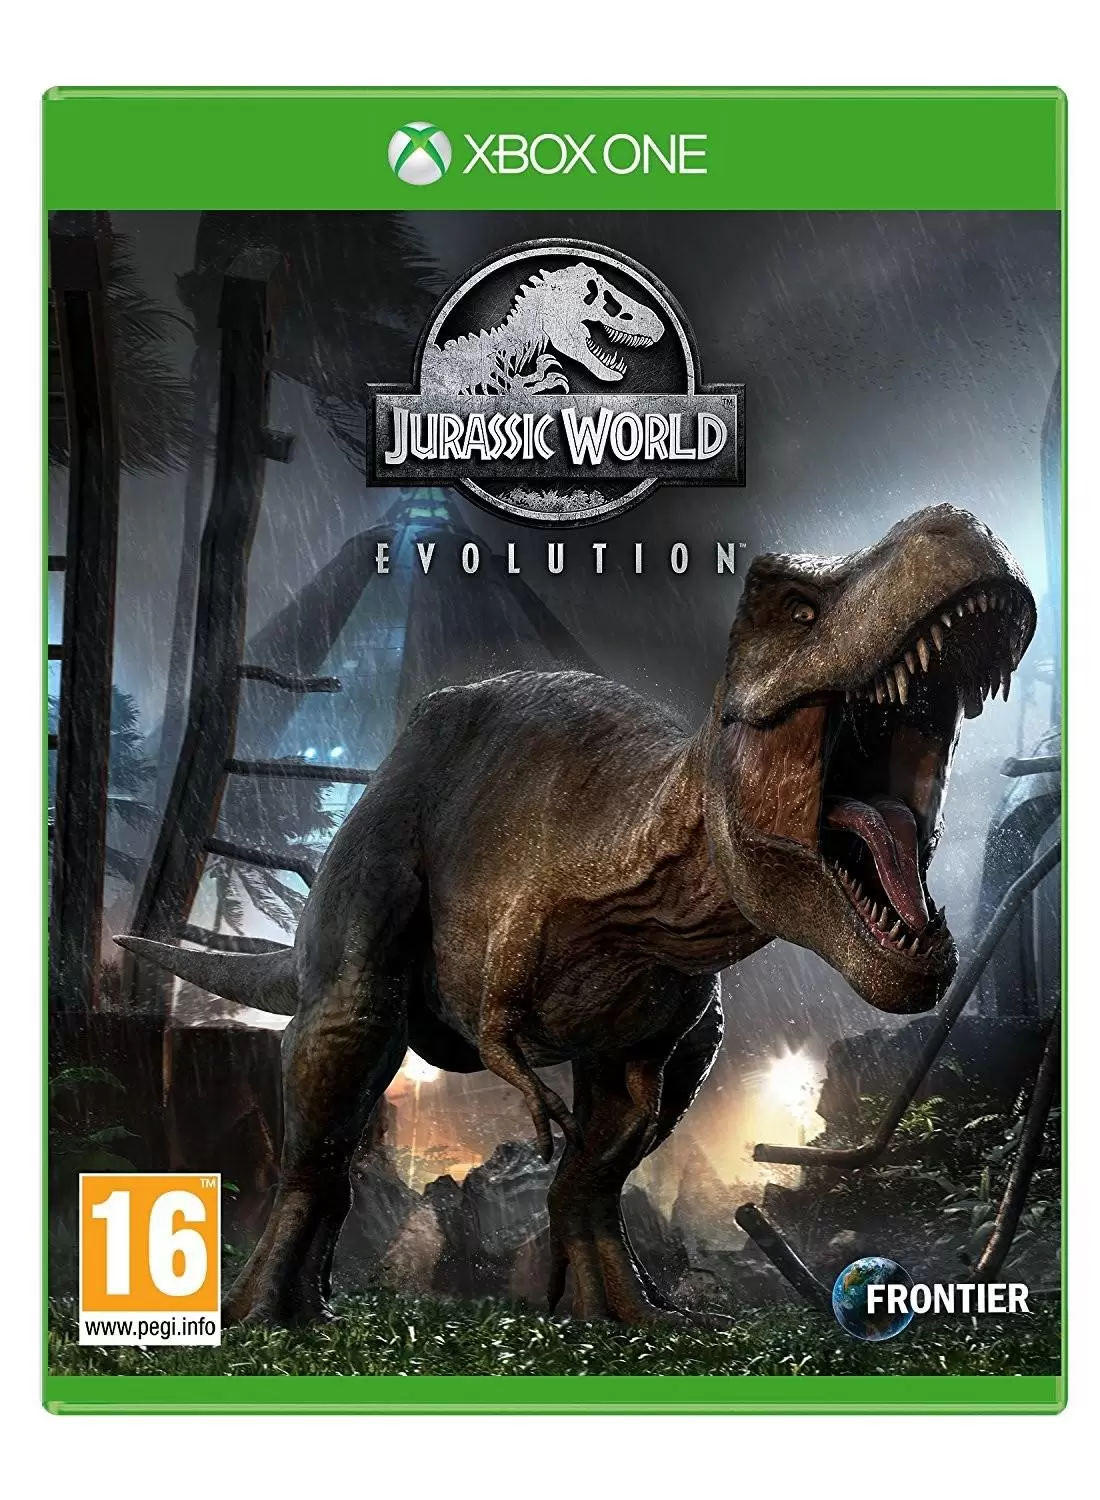 XBOX One Games - Jurassic World Evolution